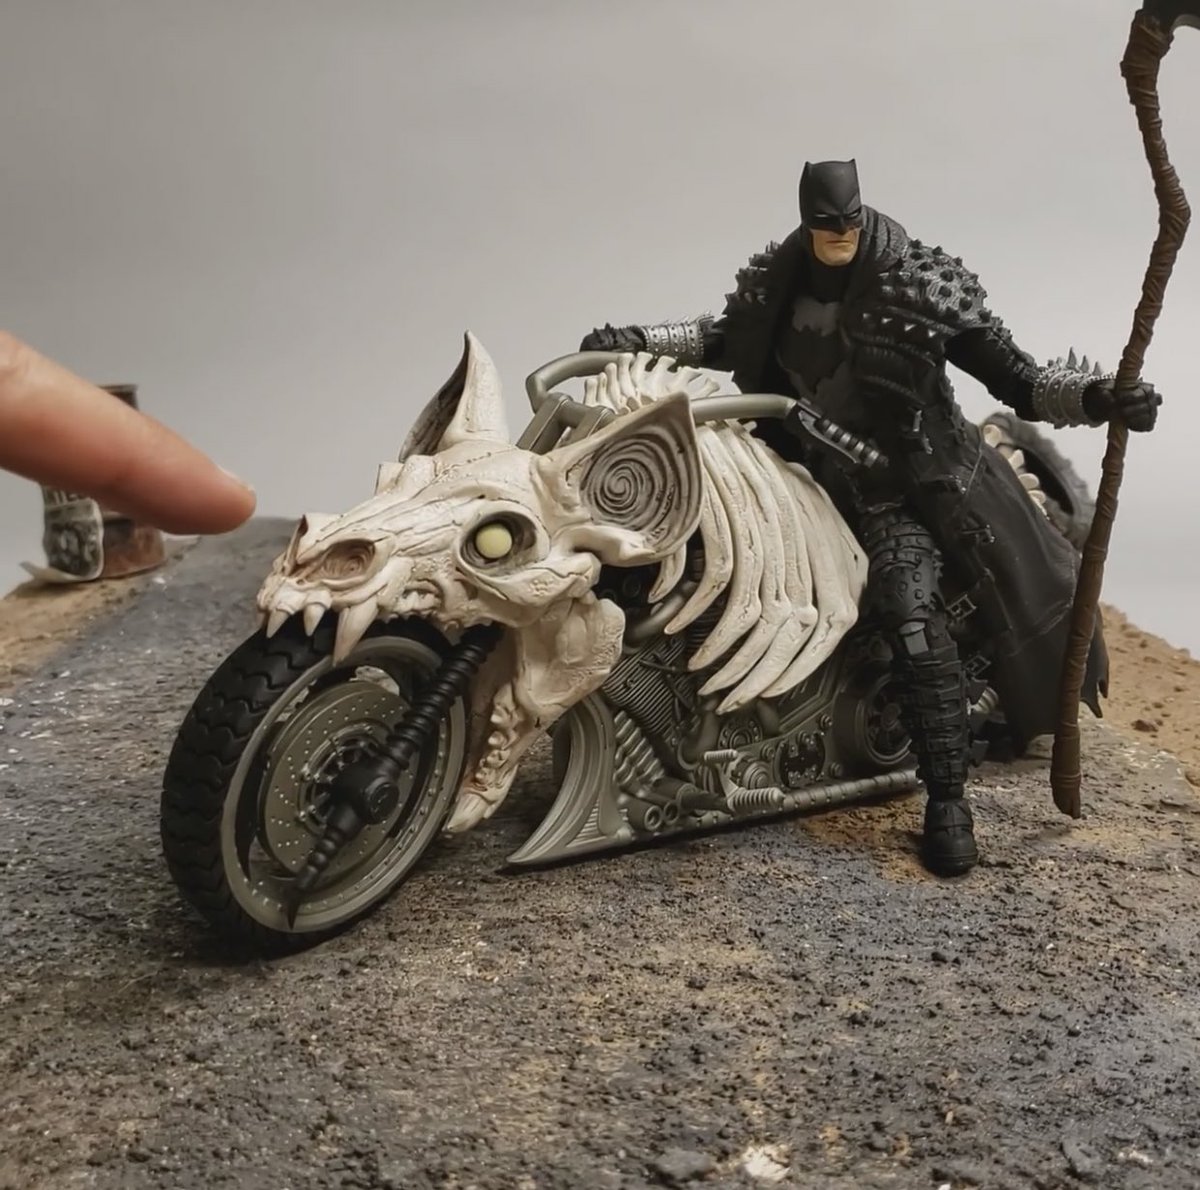 preternia on X: So Death Metal Batman CAN sit on his Death Metal Motorcycle.   / X